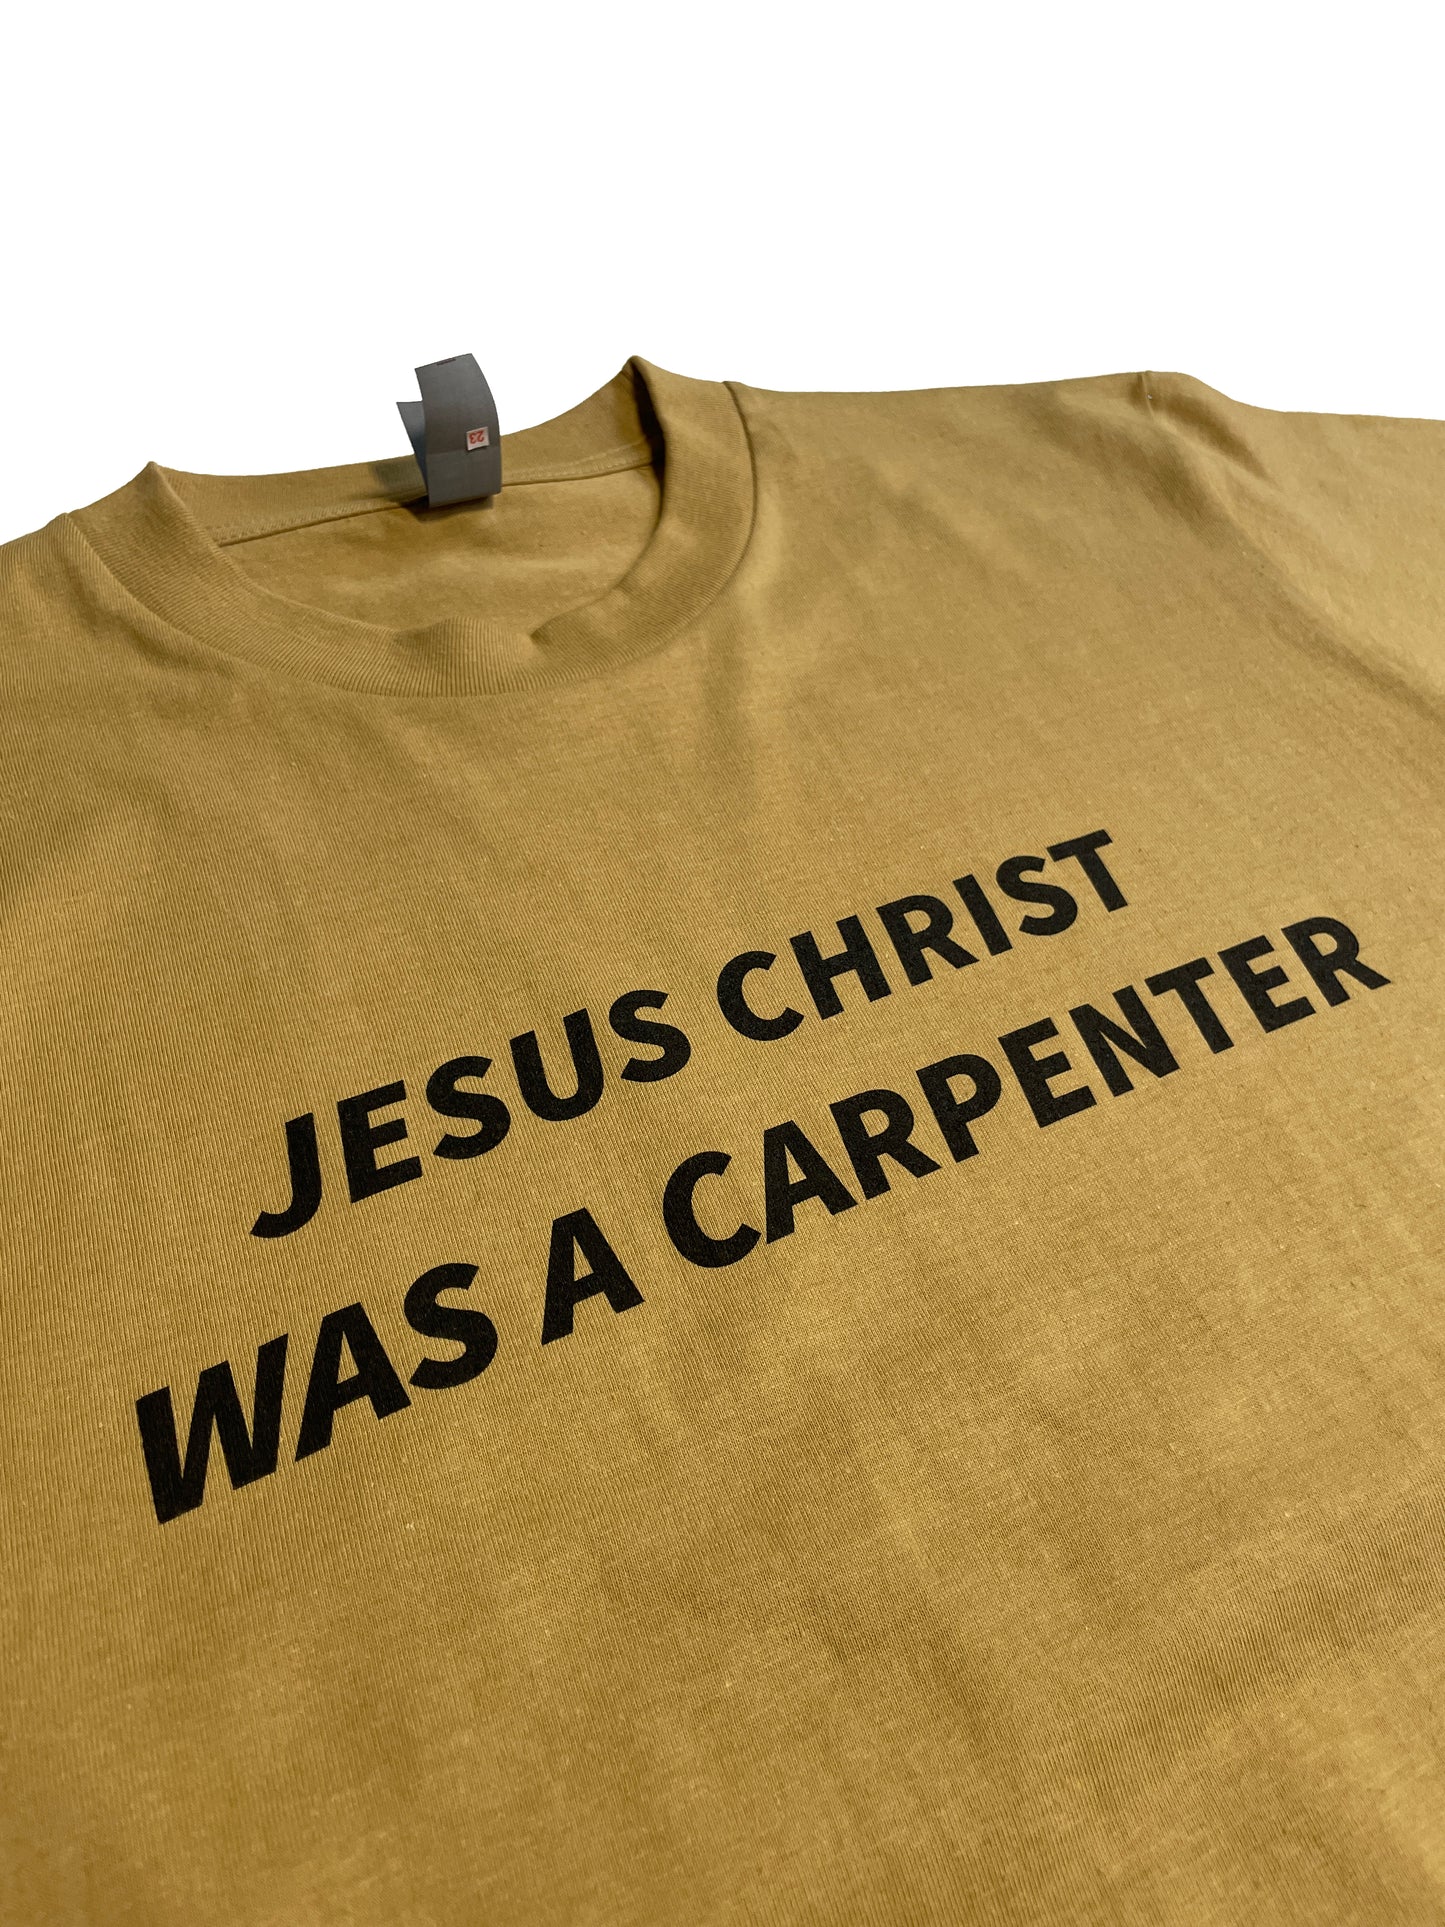 "JC WAS A CARPENTER" TEE